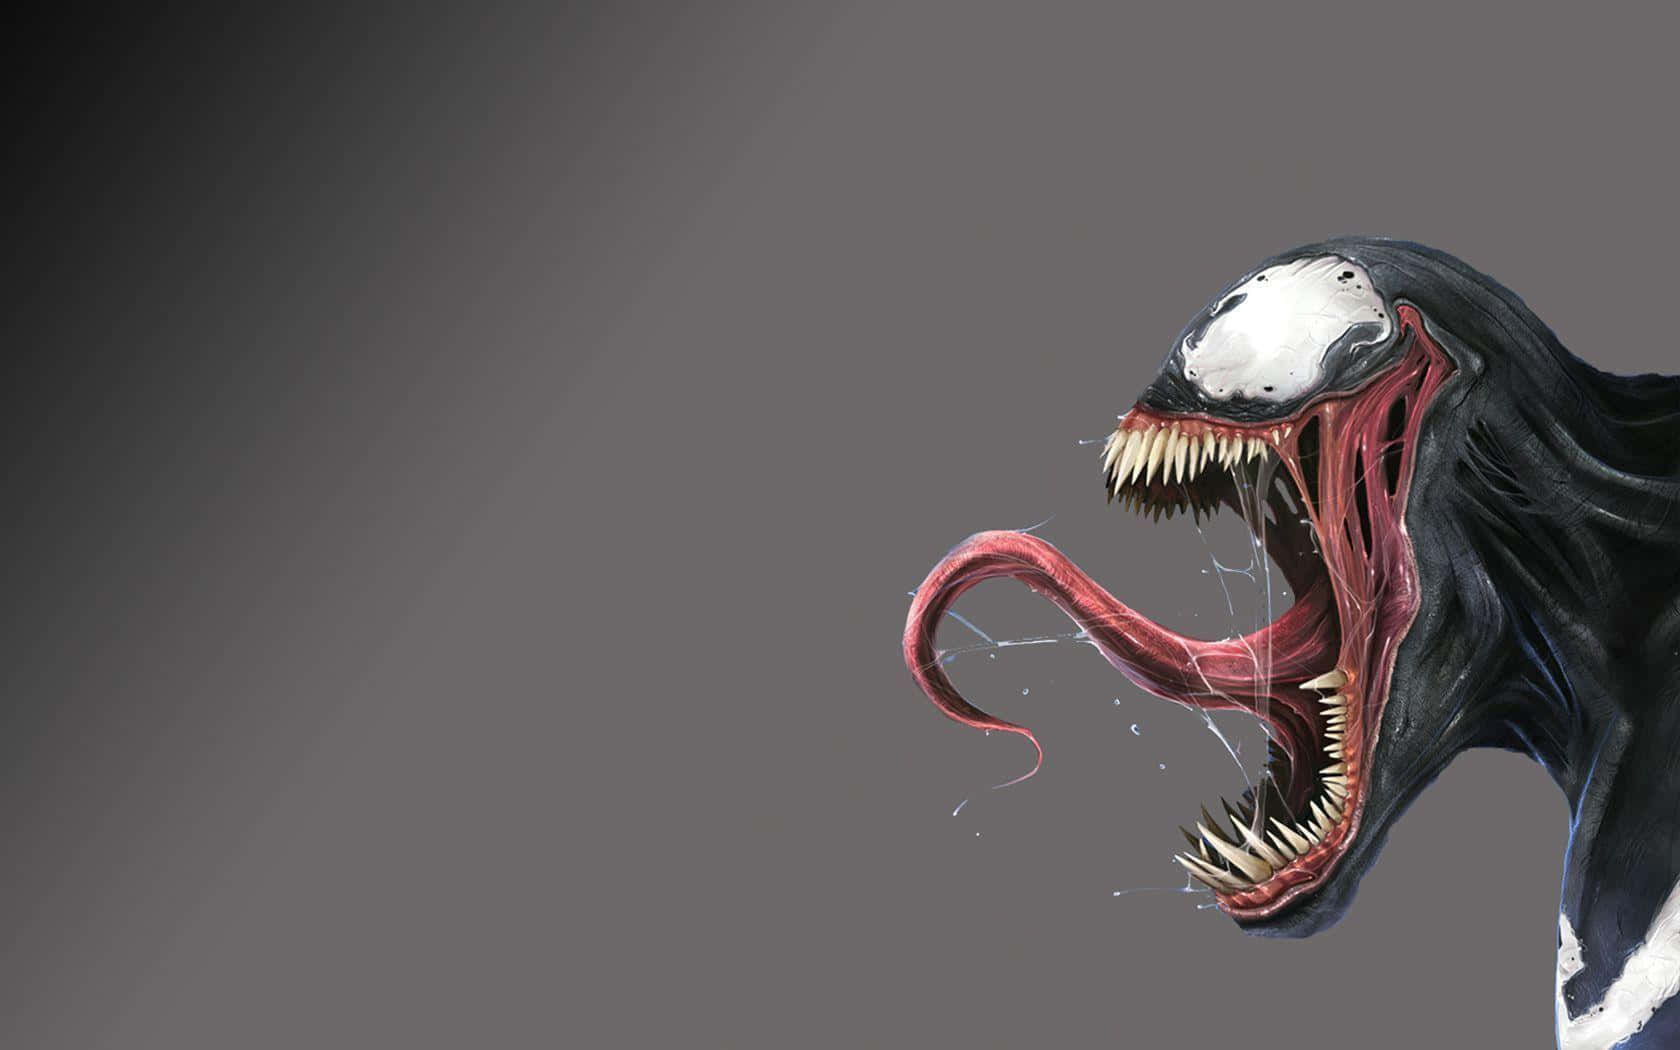 Venom Comic Book Character in Action Wallpaper